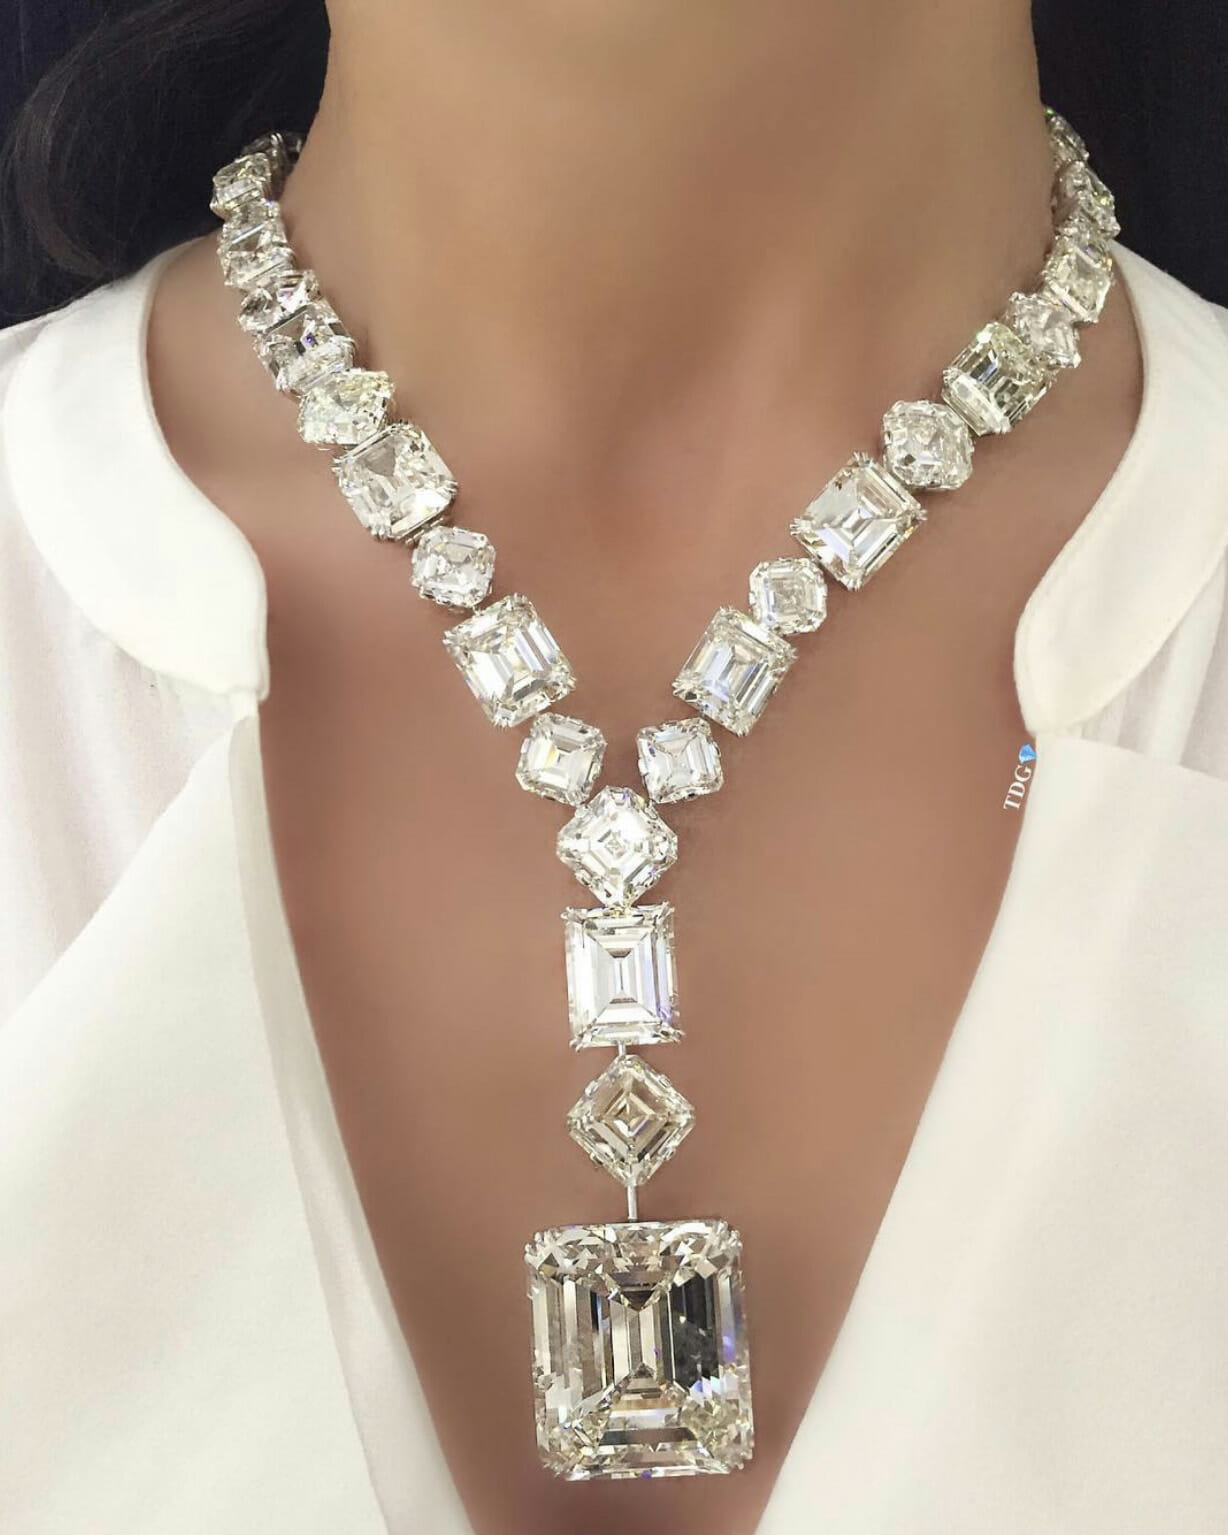 The Diamonds Girl Tracy Ellison wearing a Jacob the Jeweler Jacob and Co. diamond necklace